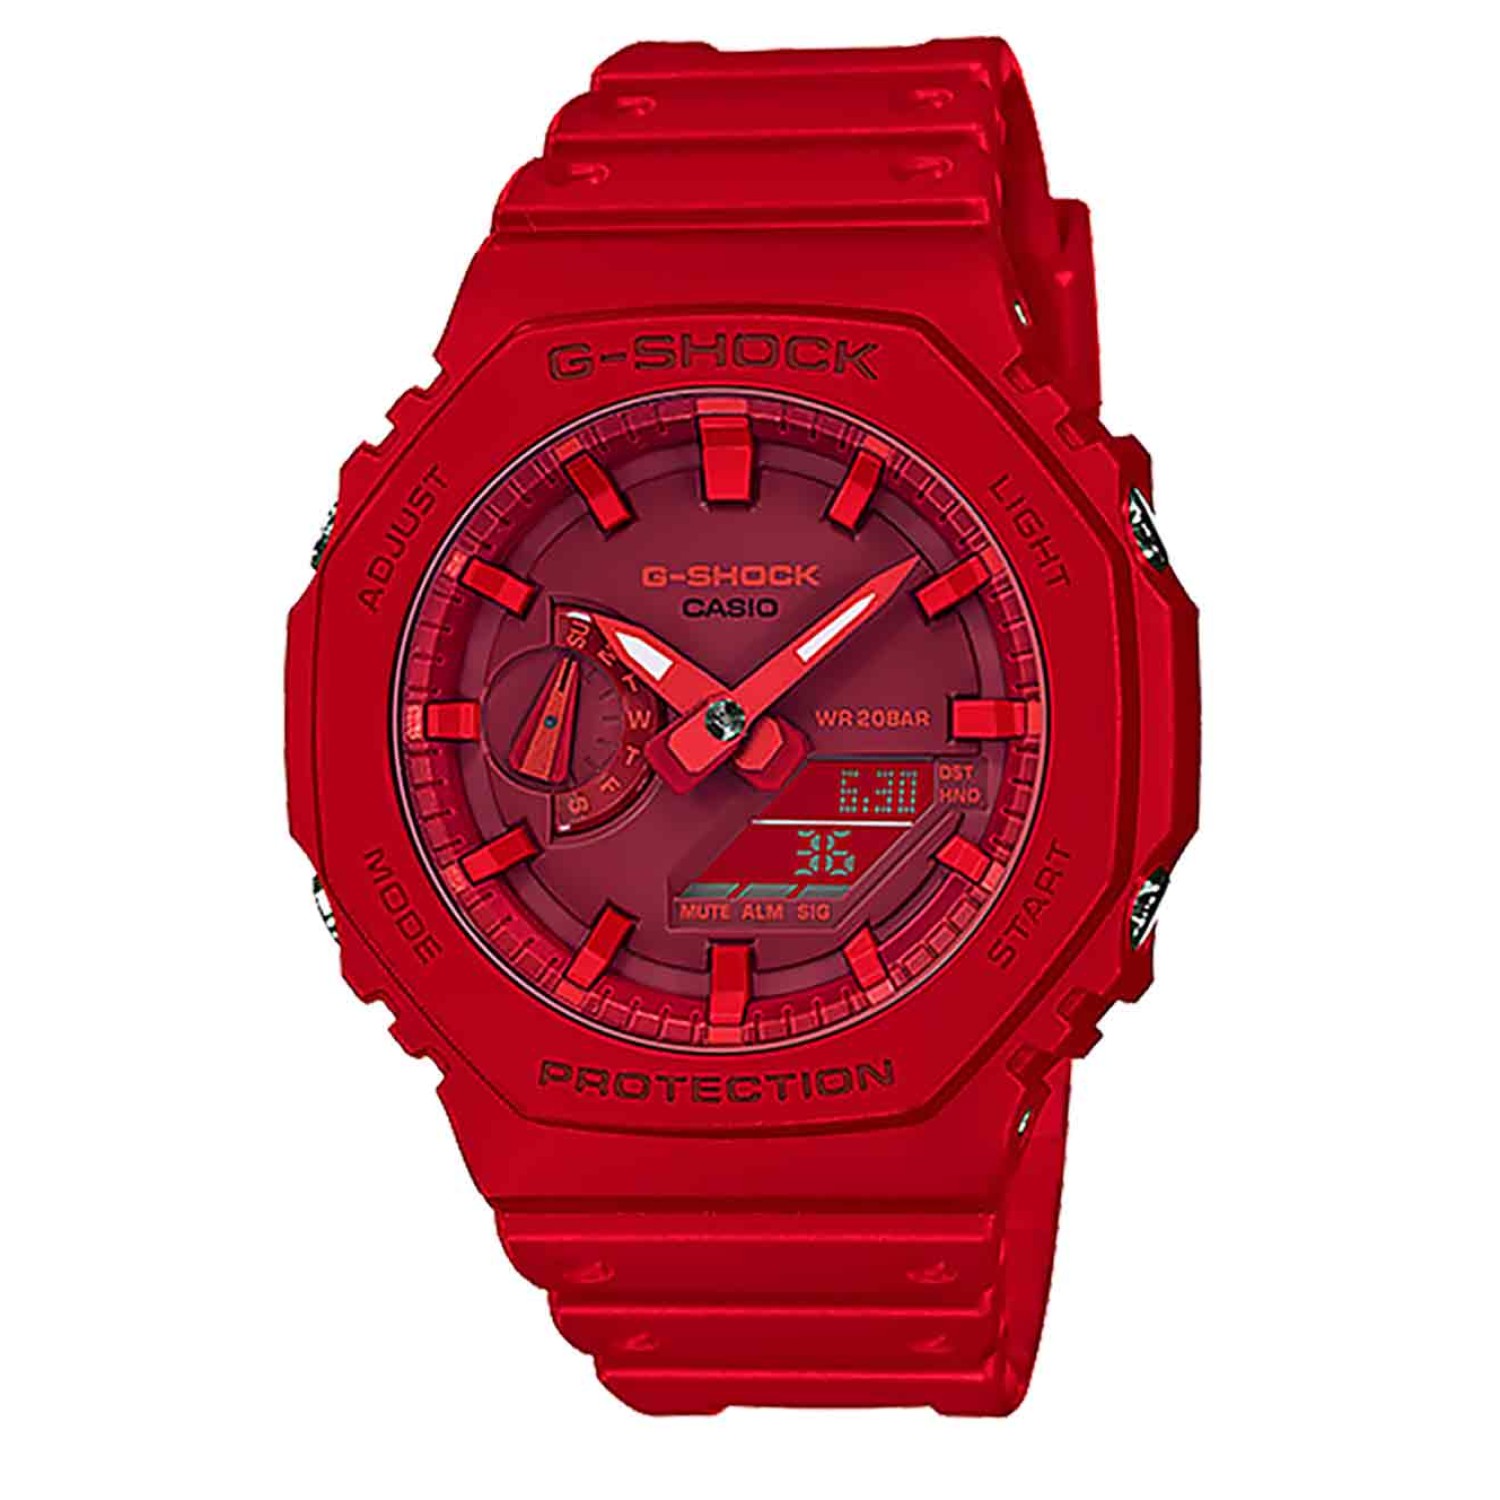 GA2100-4A G-SHOCK Carbon Core Watch.casio watches nz sale $279.00